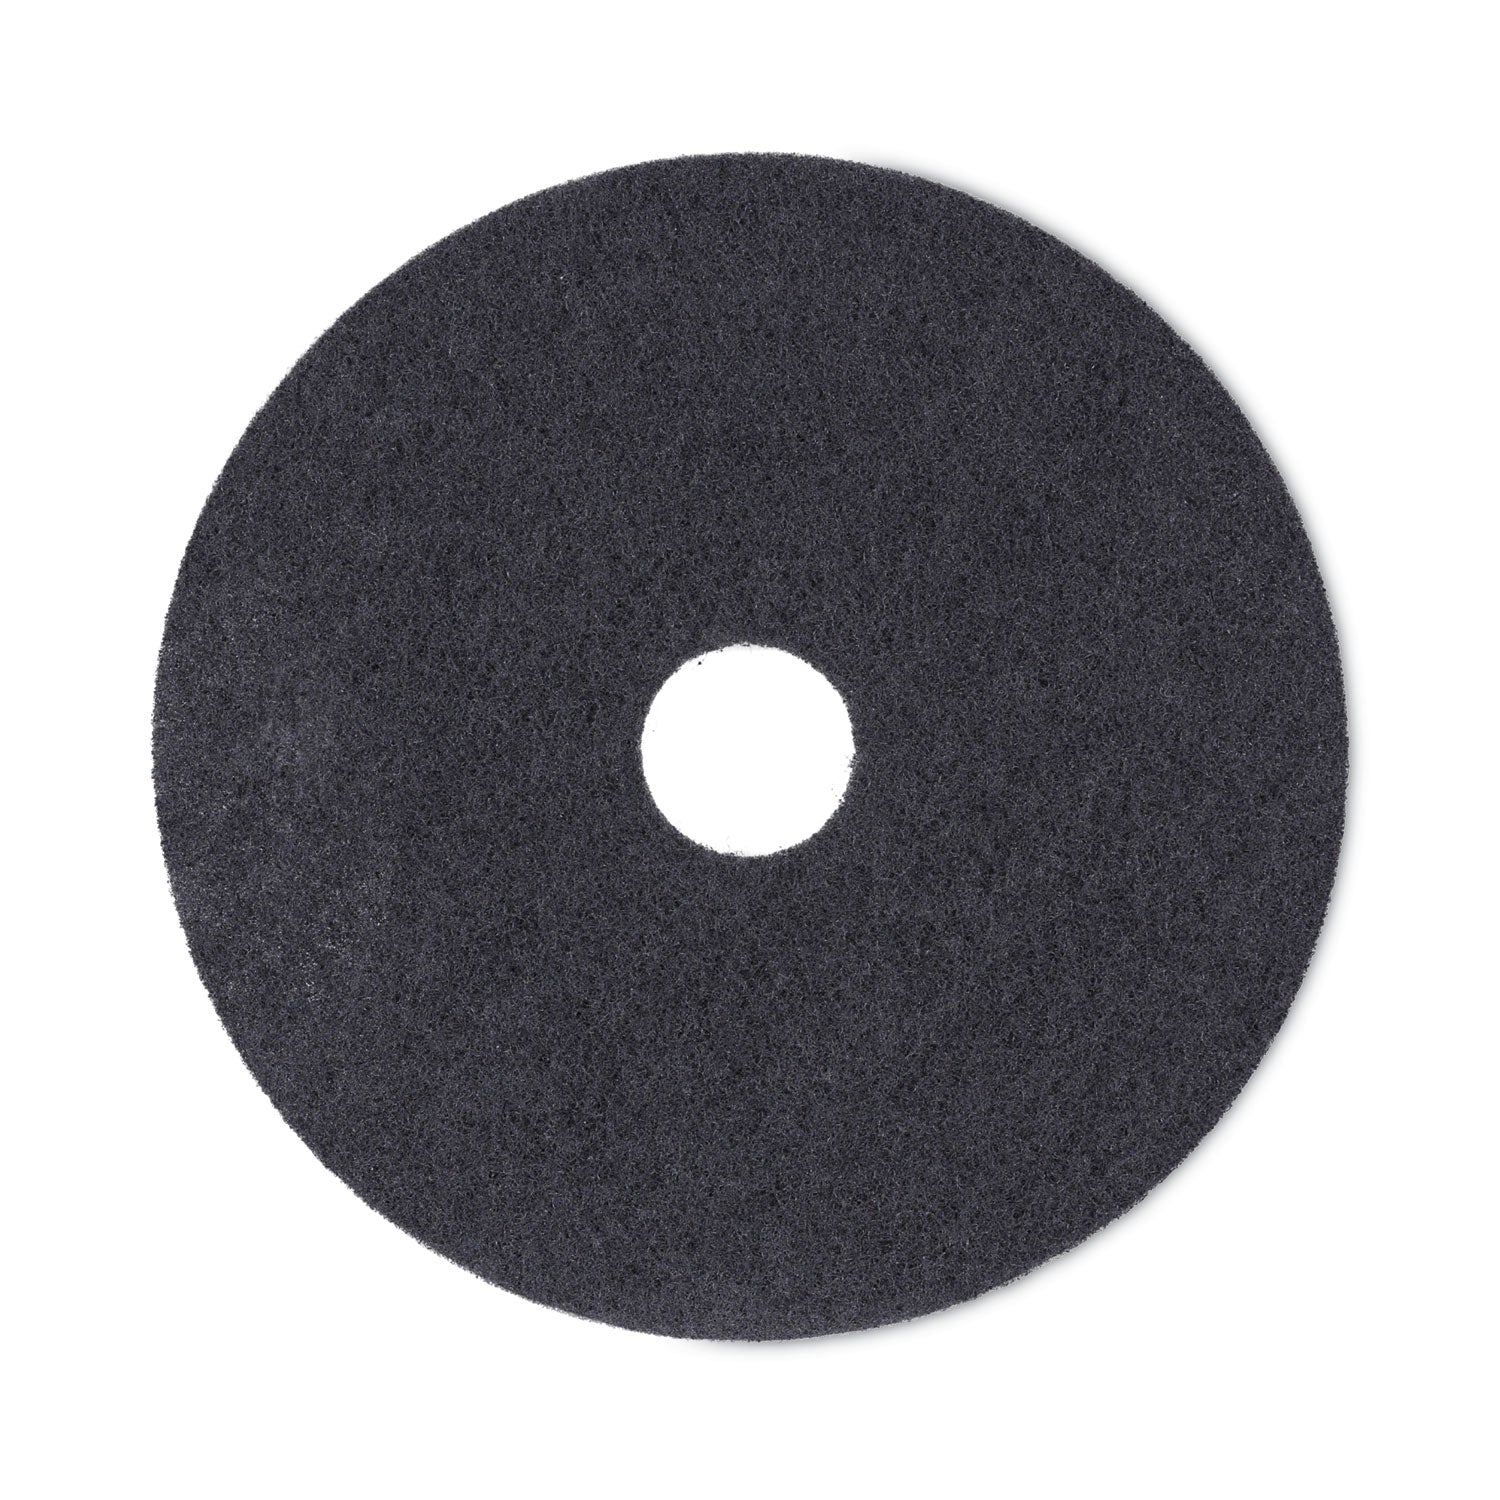 stripping-floor-pads-18-diameter-black-5-carton_bwk4018bla - 1